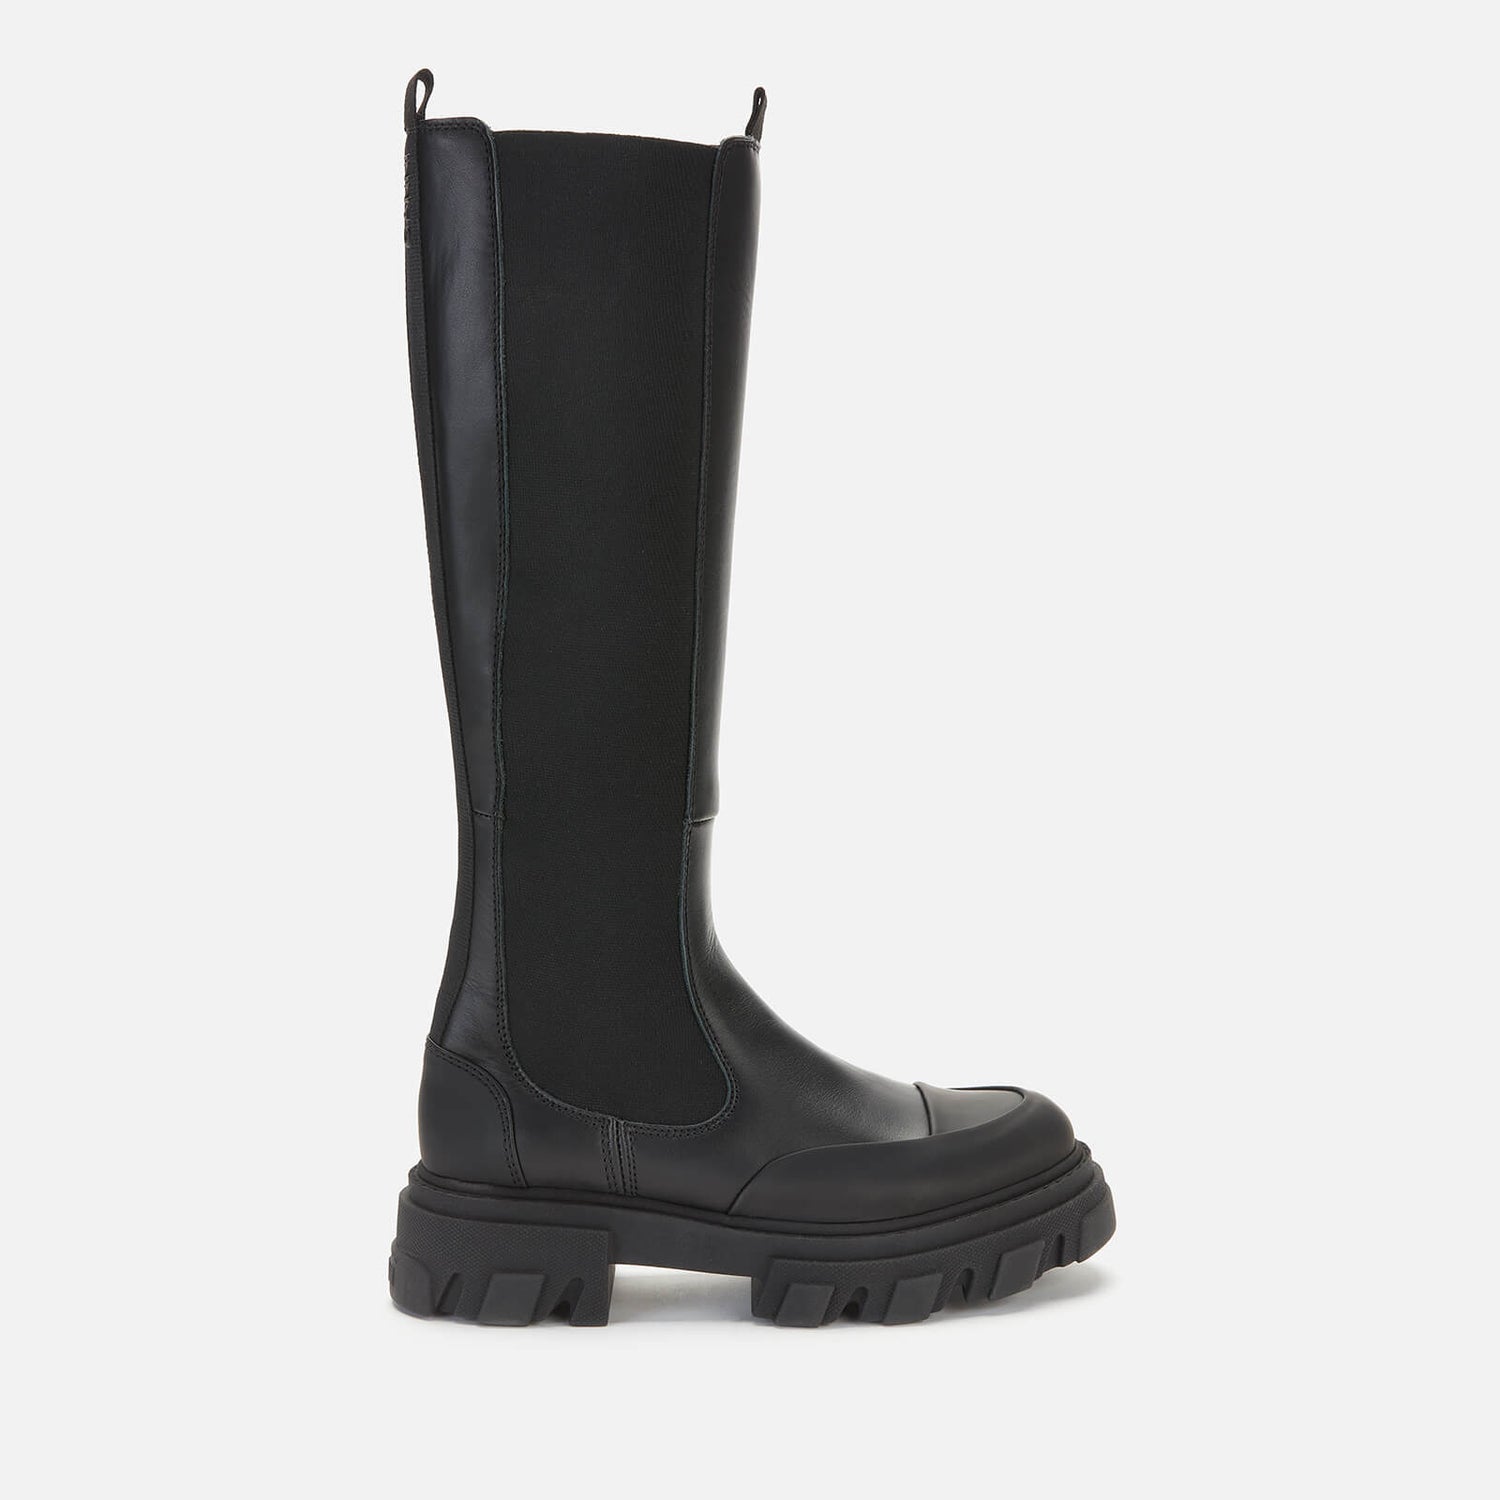 Ganni Women's Knee High Leather Chelsea Boots - Black - UK 3